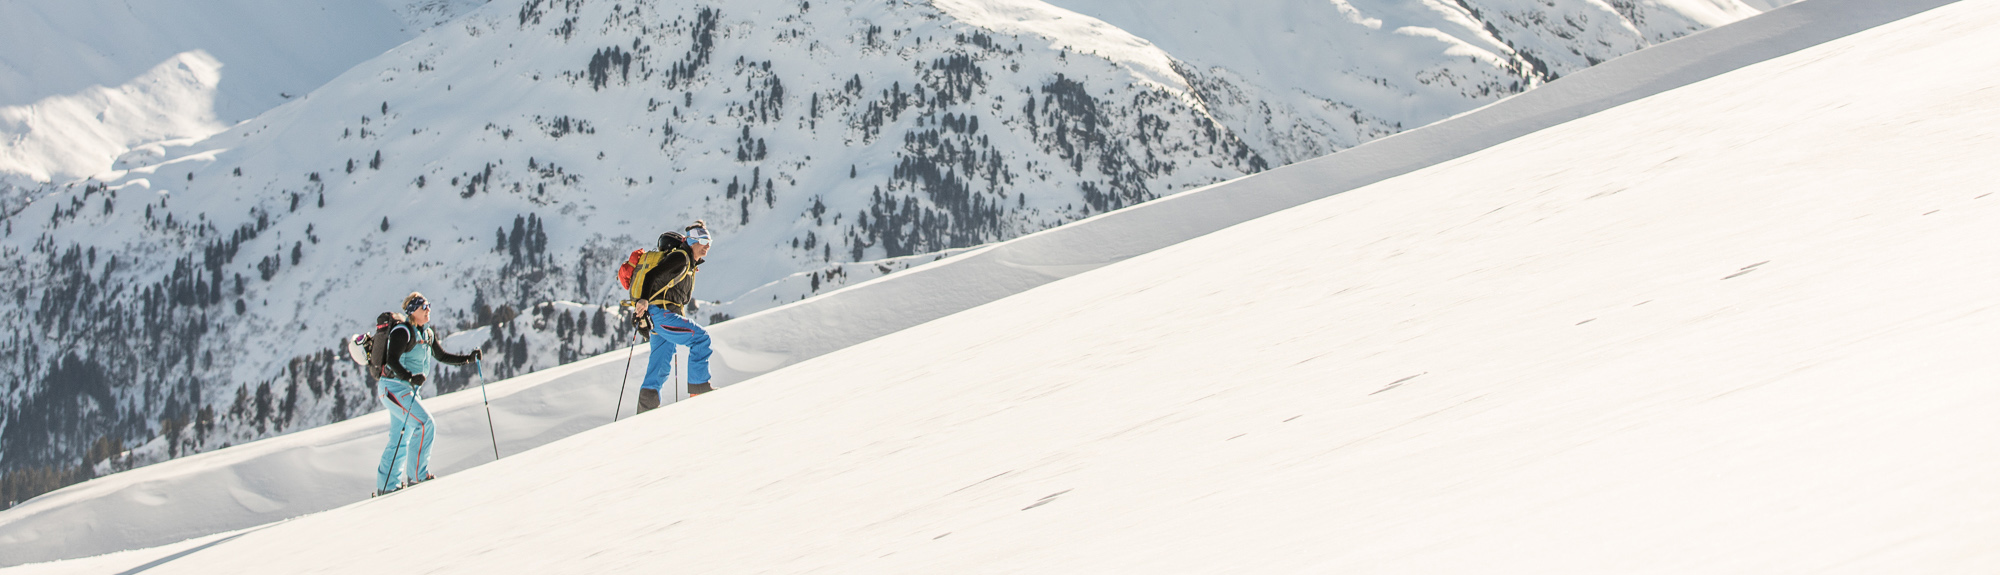 piste to powder mountain guides - off piste ski guiding in st anton lech zürs arlberg | privat bergführer und ski guides in st anton lech zürs